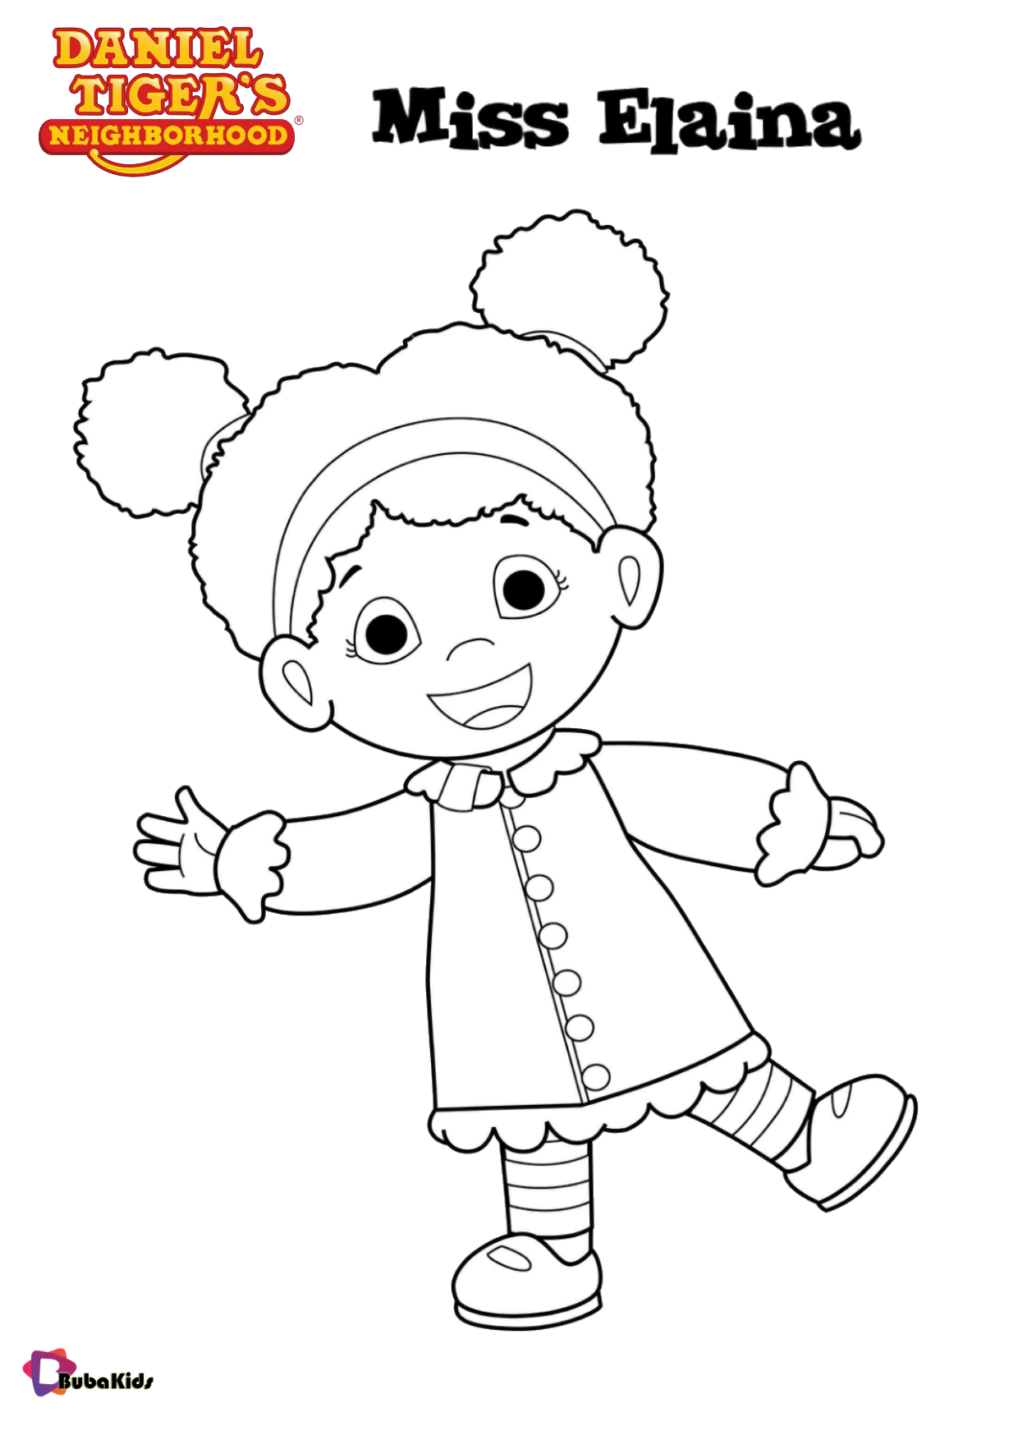 miss elaina character from children tv serial daniel tigers neighborhood